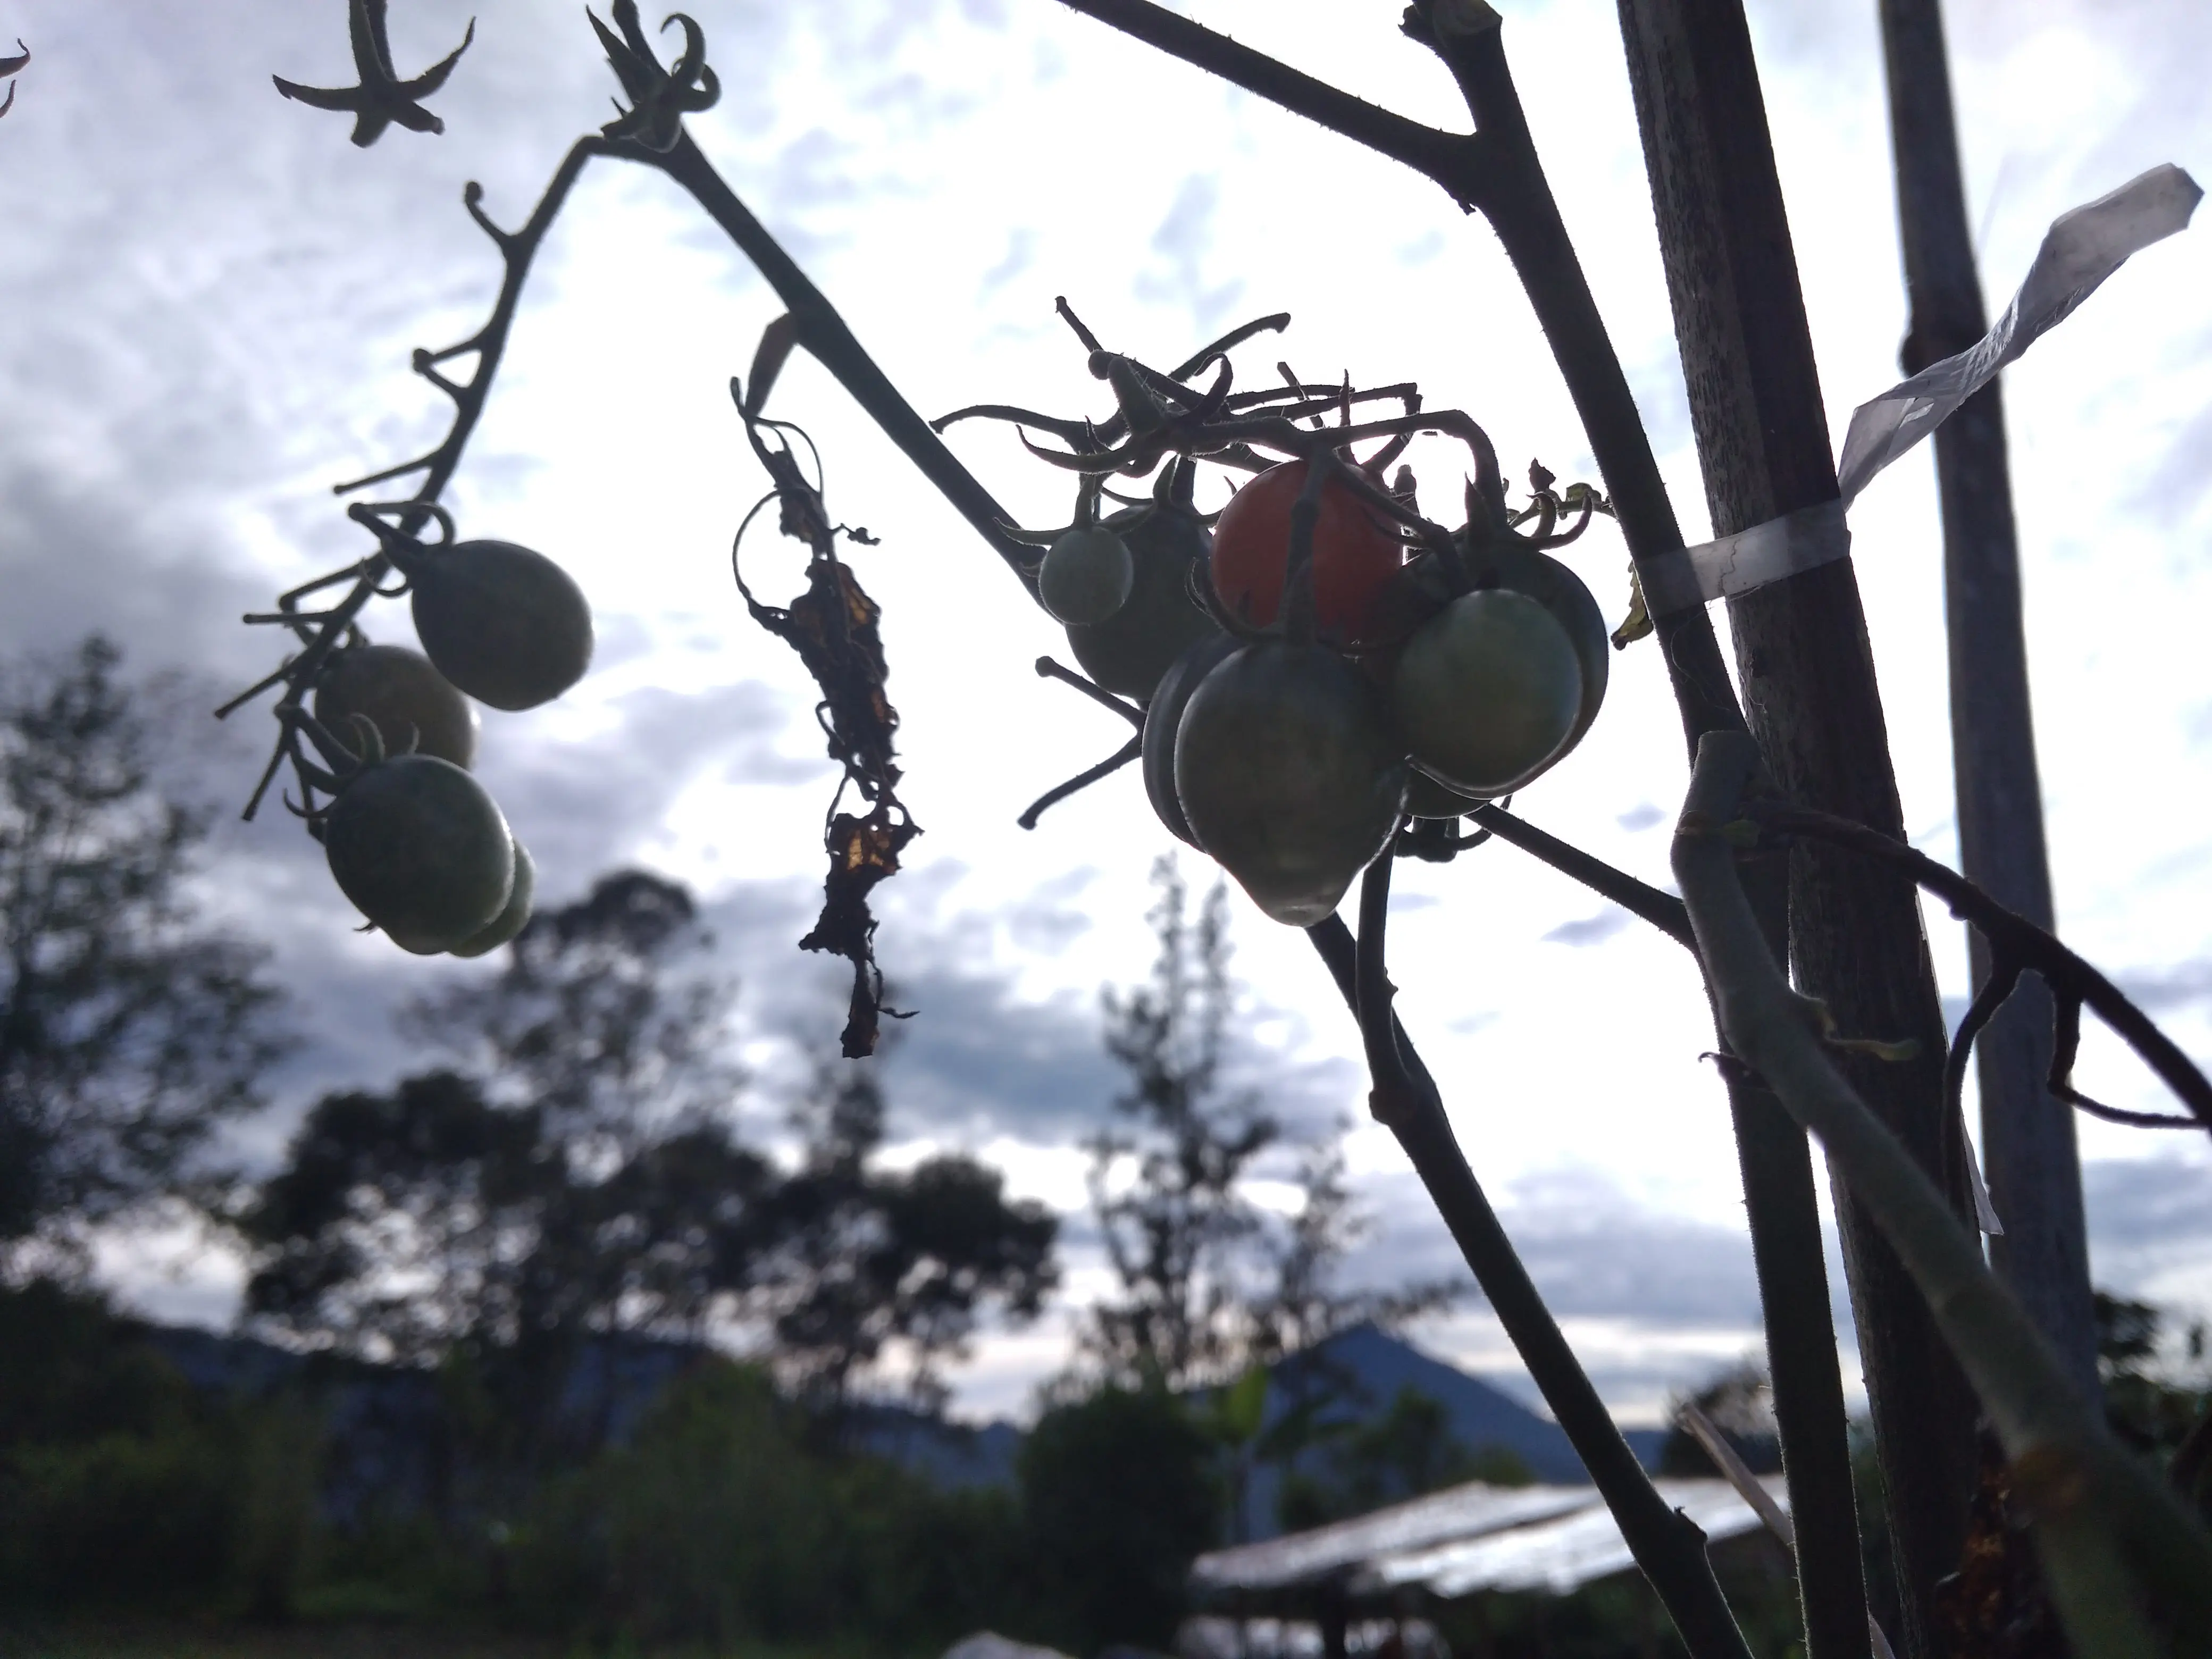 Titik embun di ujung buah tomat, bukti kesegaran udara pagi Cikole. (foto: Liputan6.com/edhie prayitno ige)